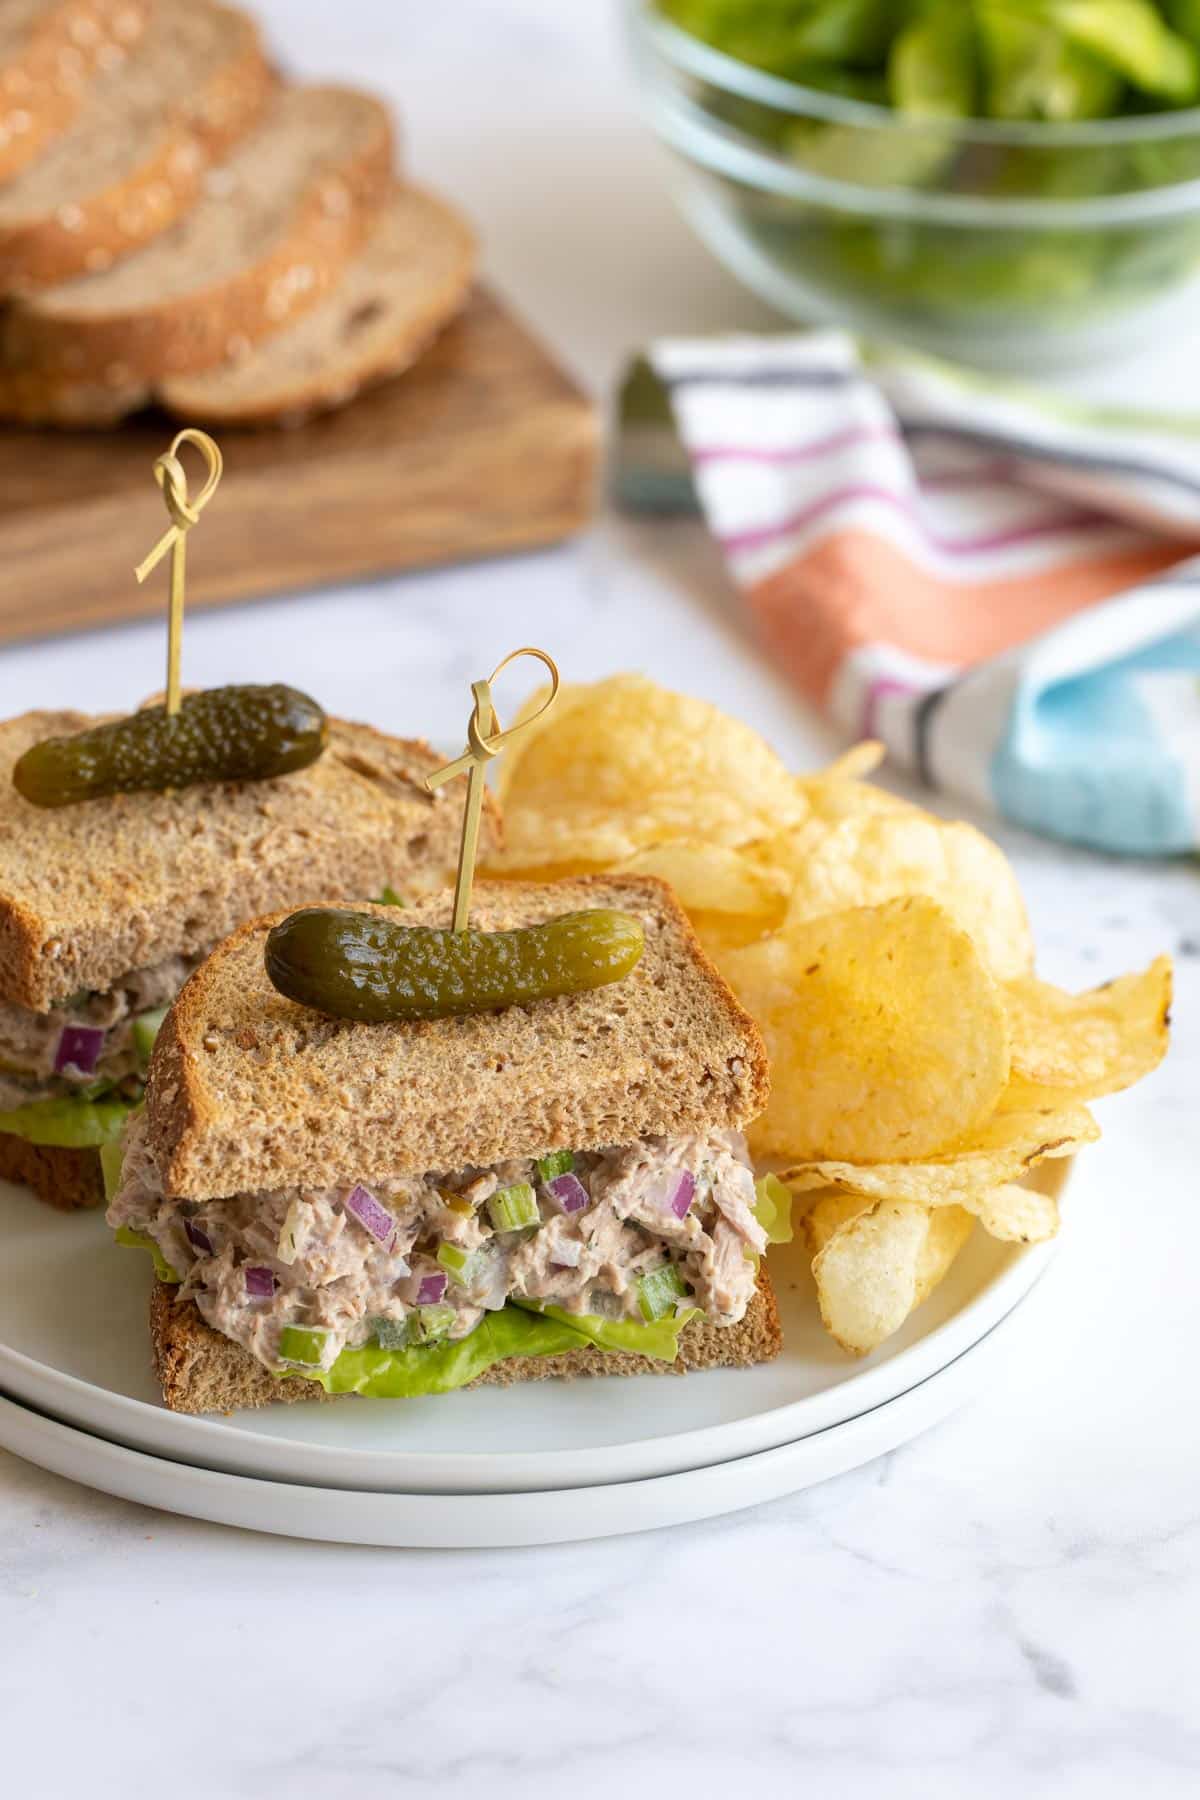 Tuna salad sandwiches on a plate.